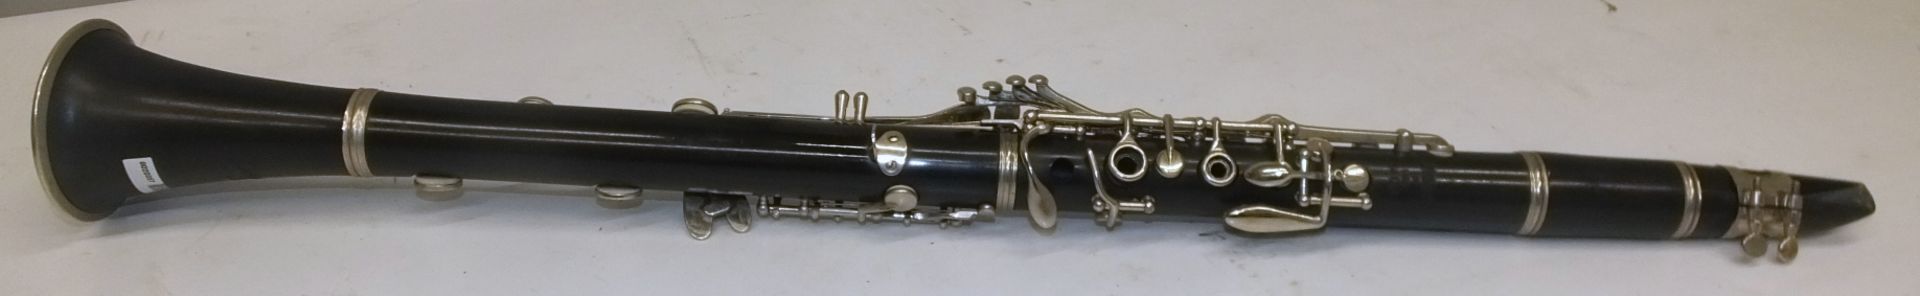 Bundy Selmer 1400 Clarinet in case - Serial Number - 1618465 - Image 15 of 17